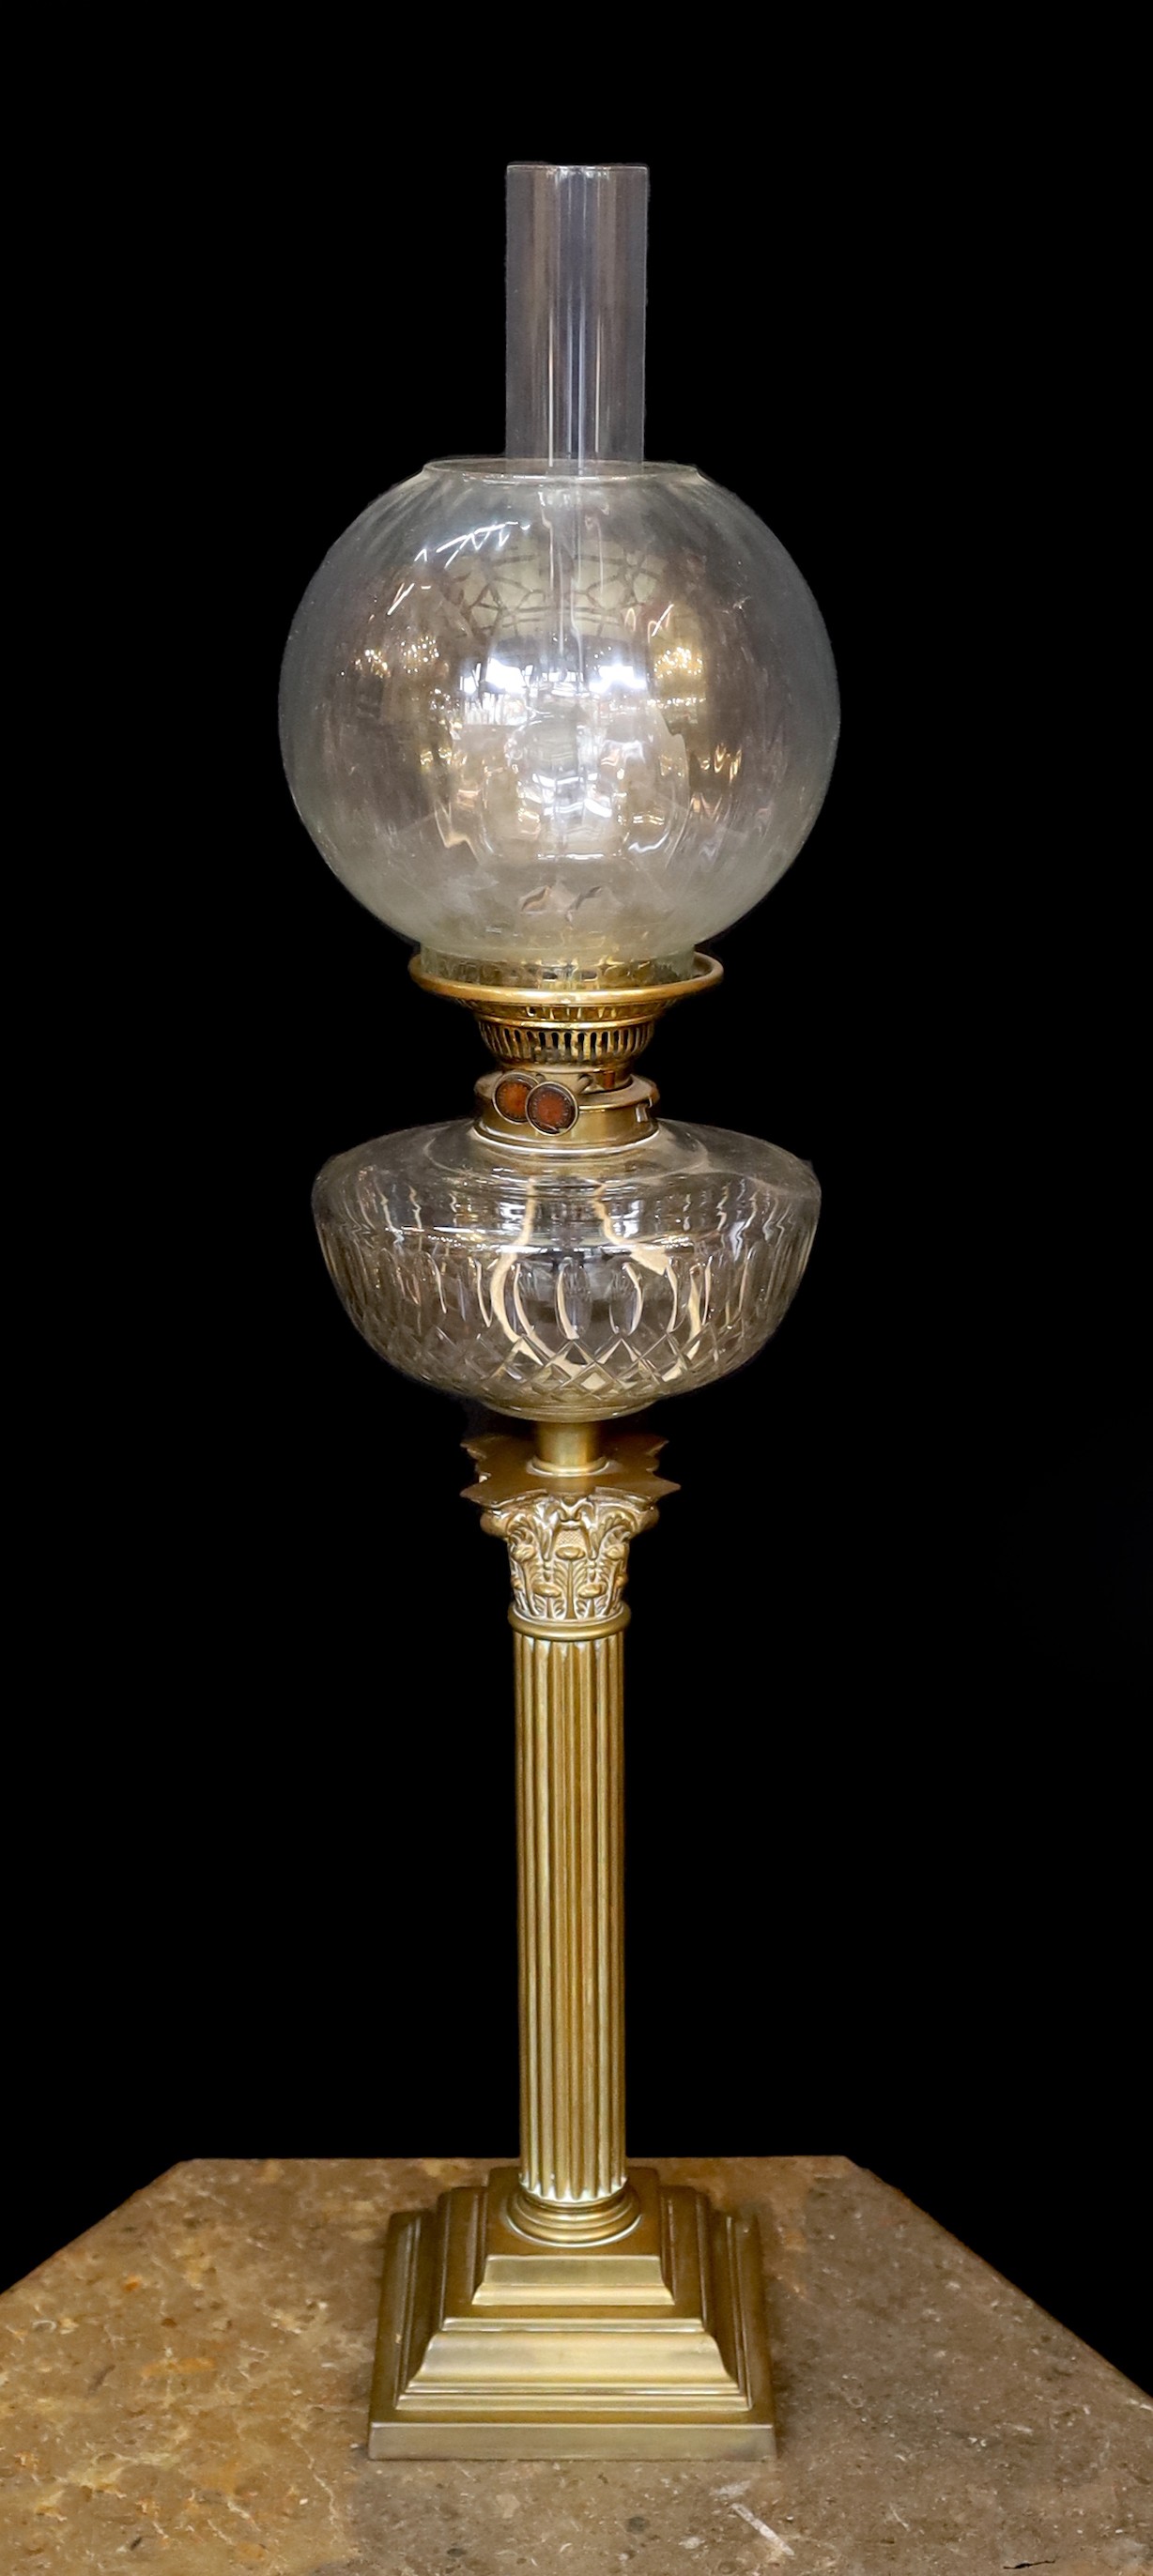 A late Victorian/Edwardian Corinthian column brass oil lamp, with cut glass reservoir, J.R.Roberts mechanism, fluted glass globe and flue, height overall 83cm